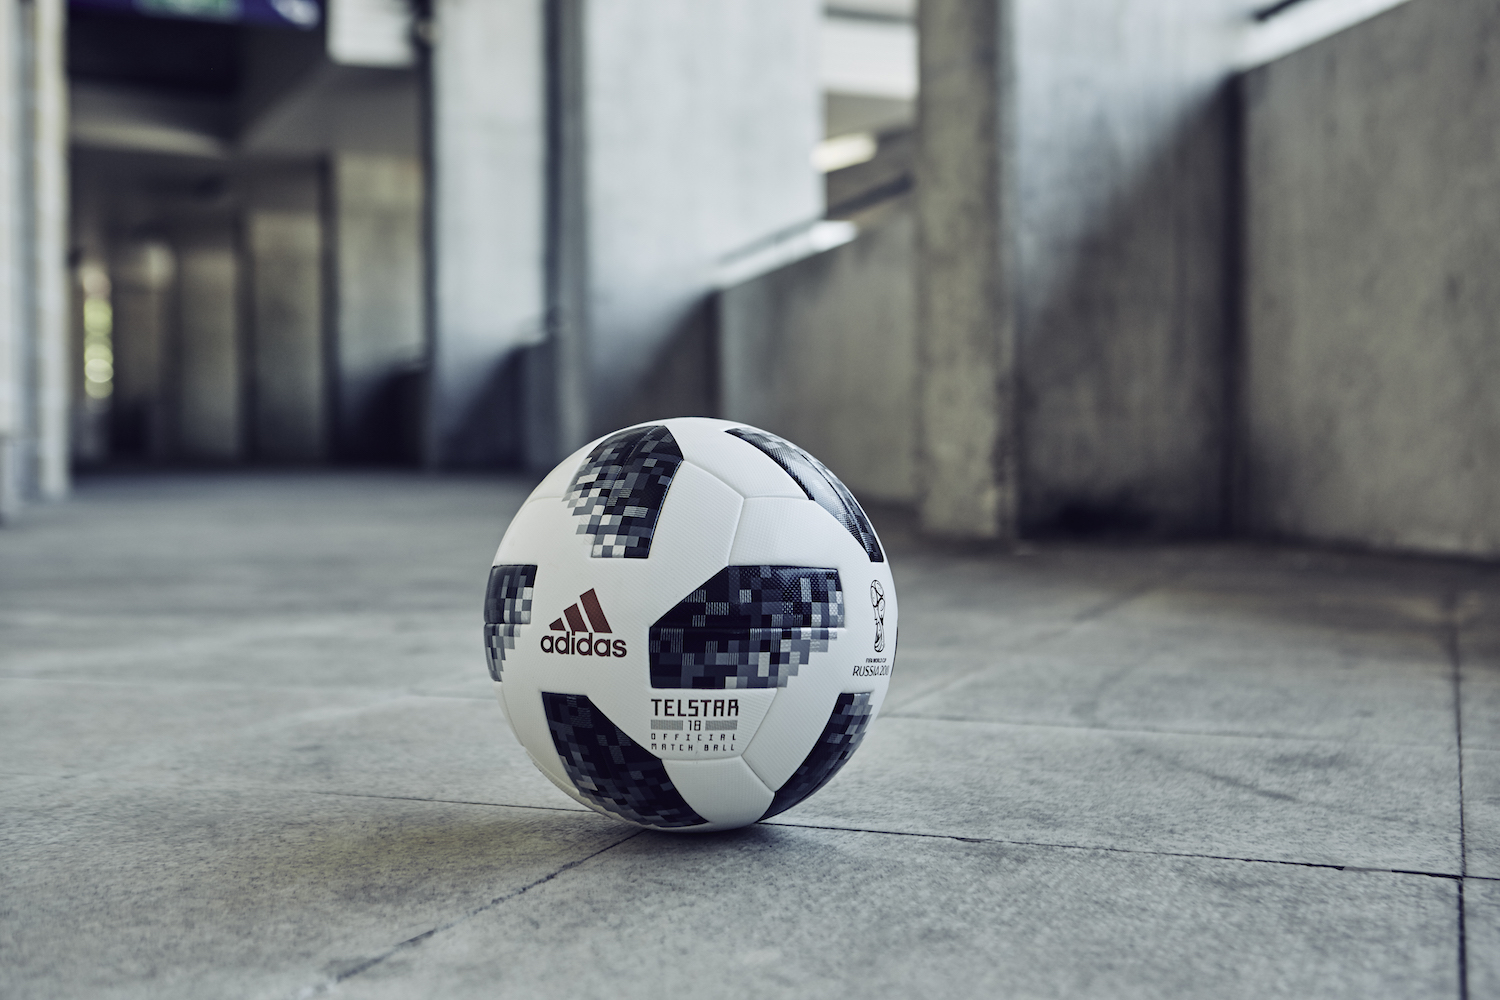 adidas official match ball 2018 fifa world cup